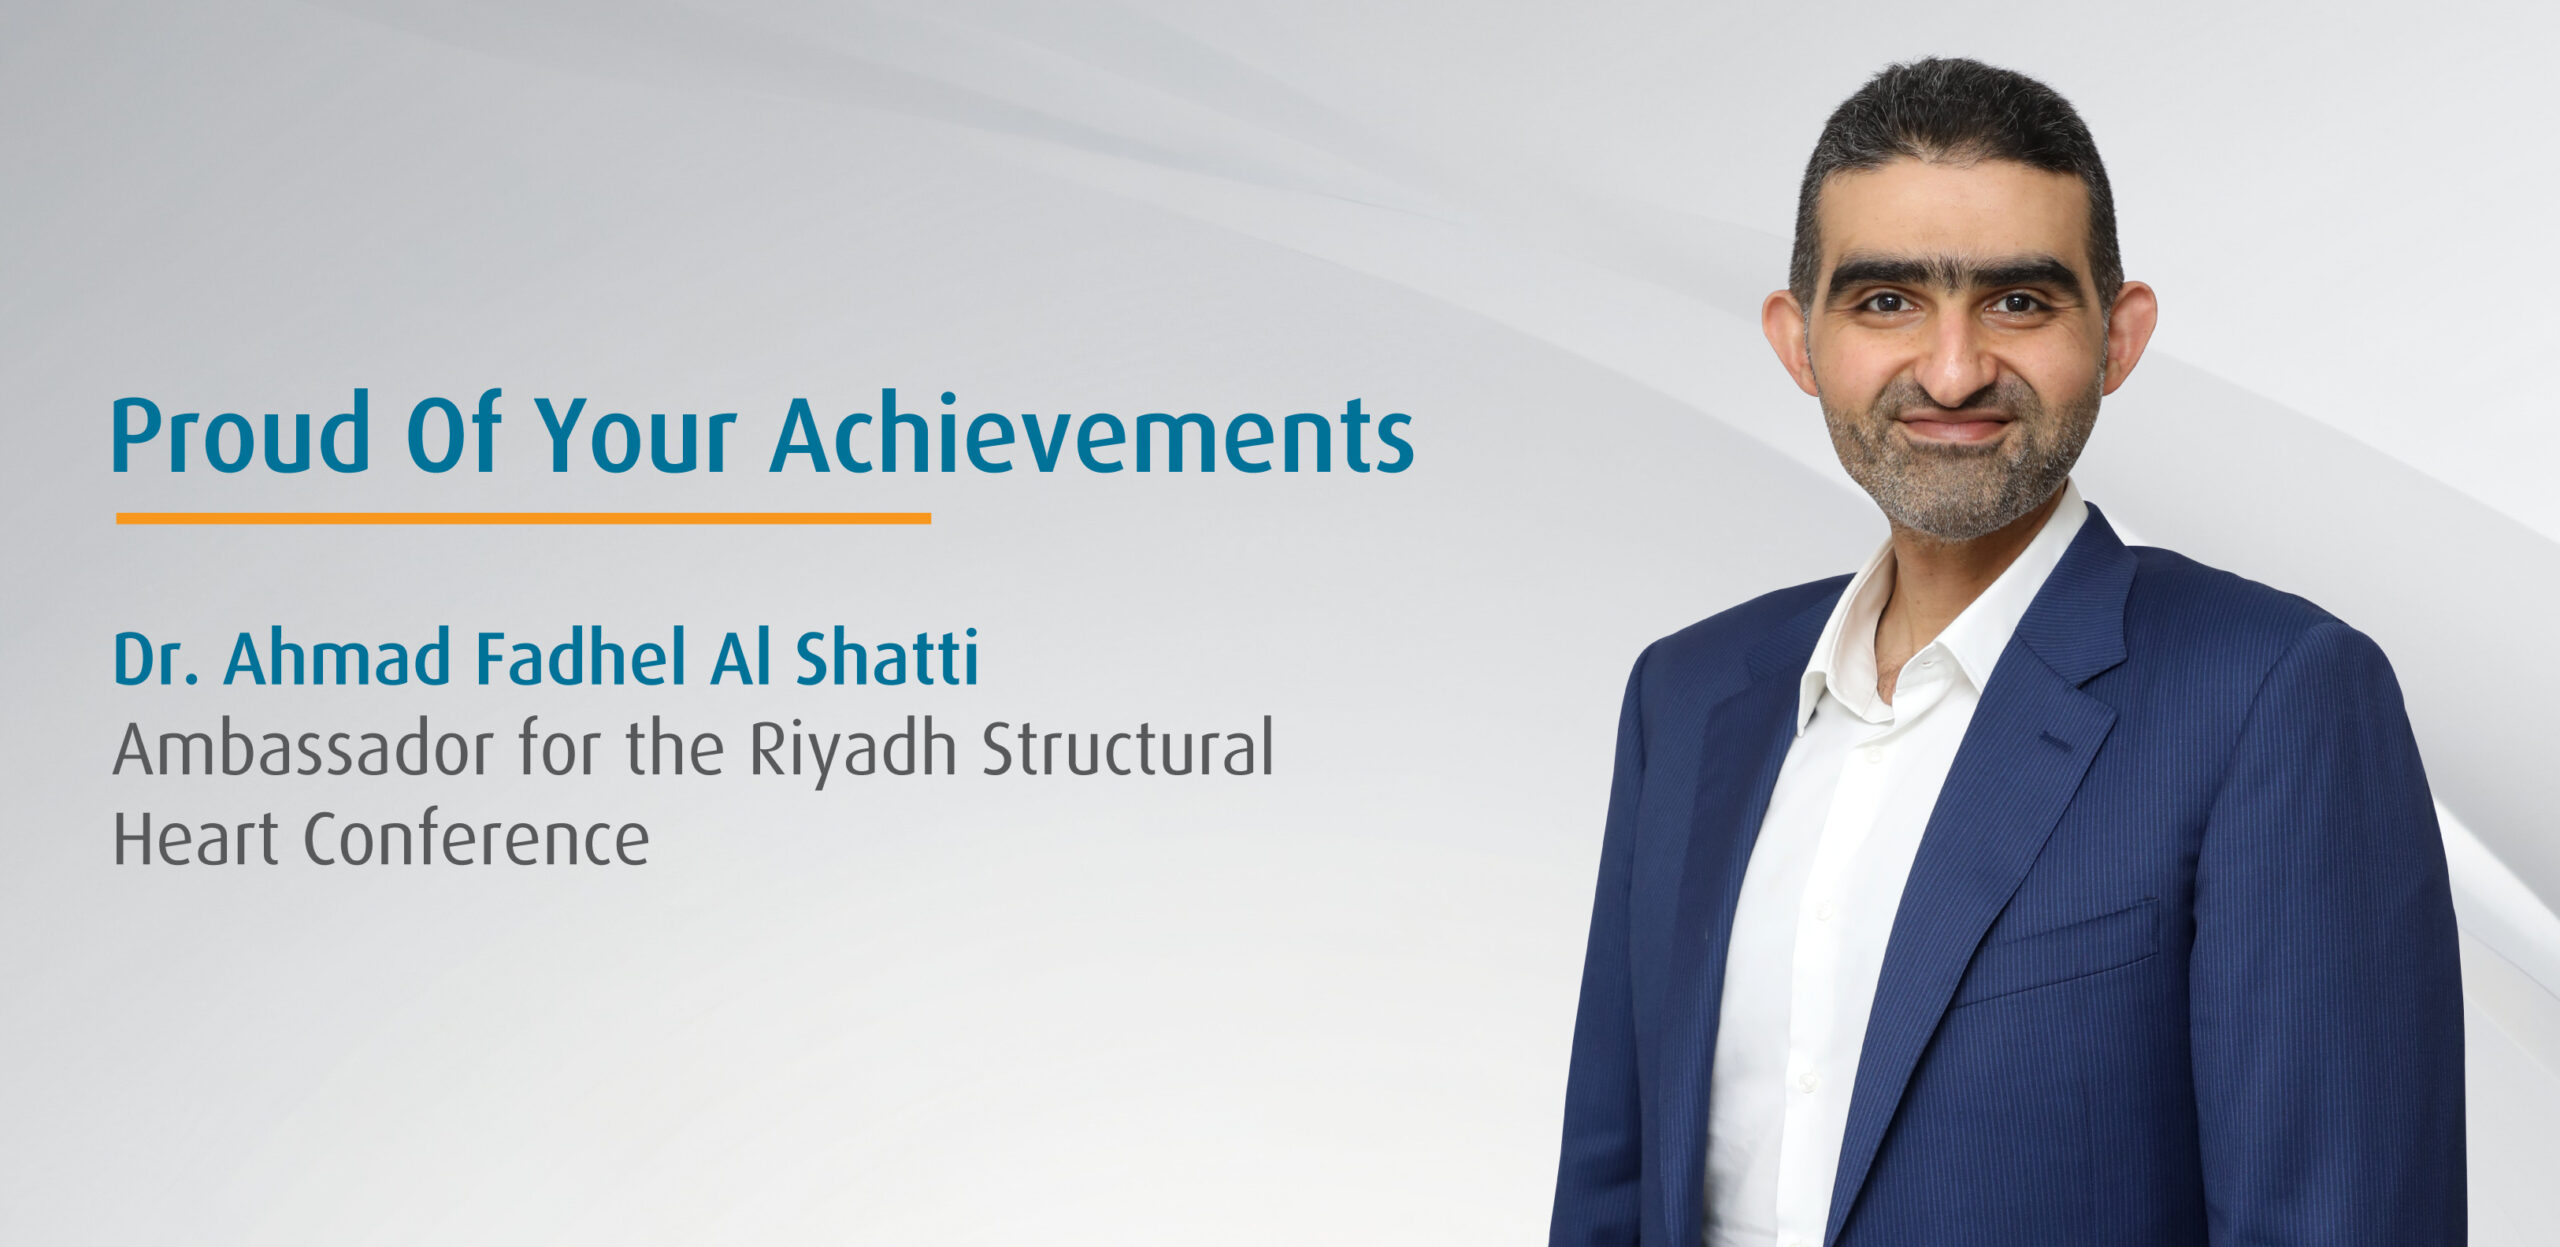 Dr. Ahmad Alshatti, Ambassador for the Riyadh Structural Heart Conference